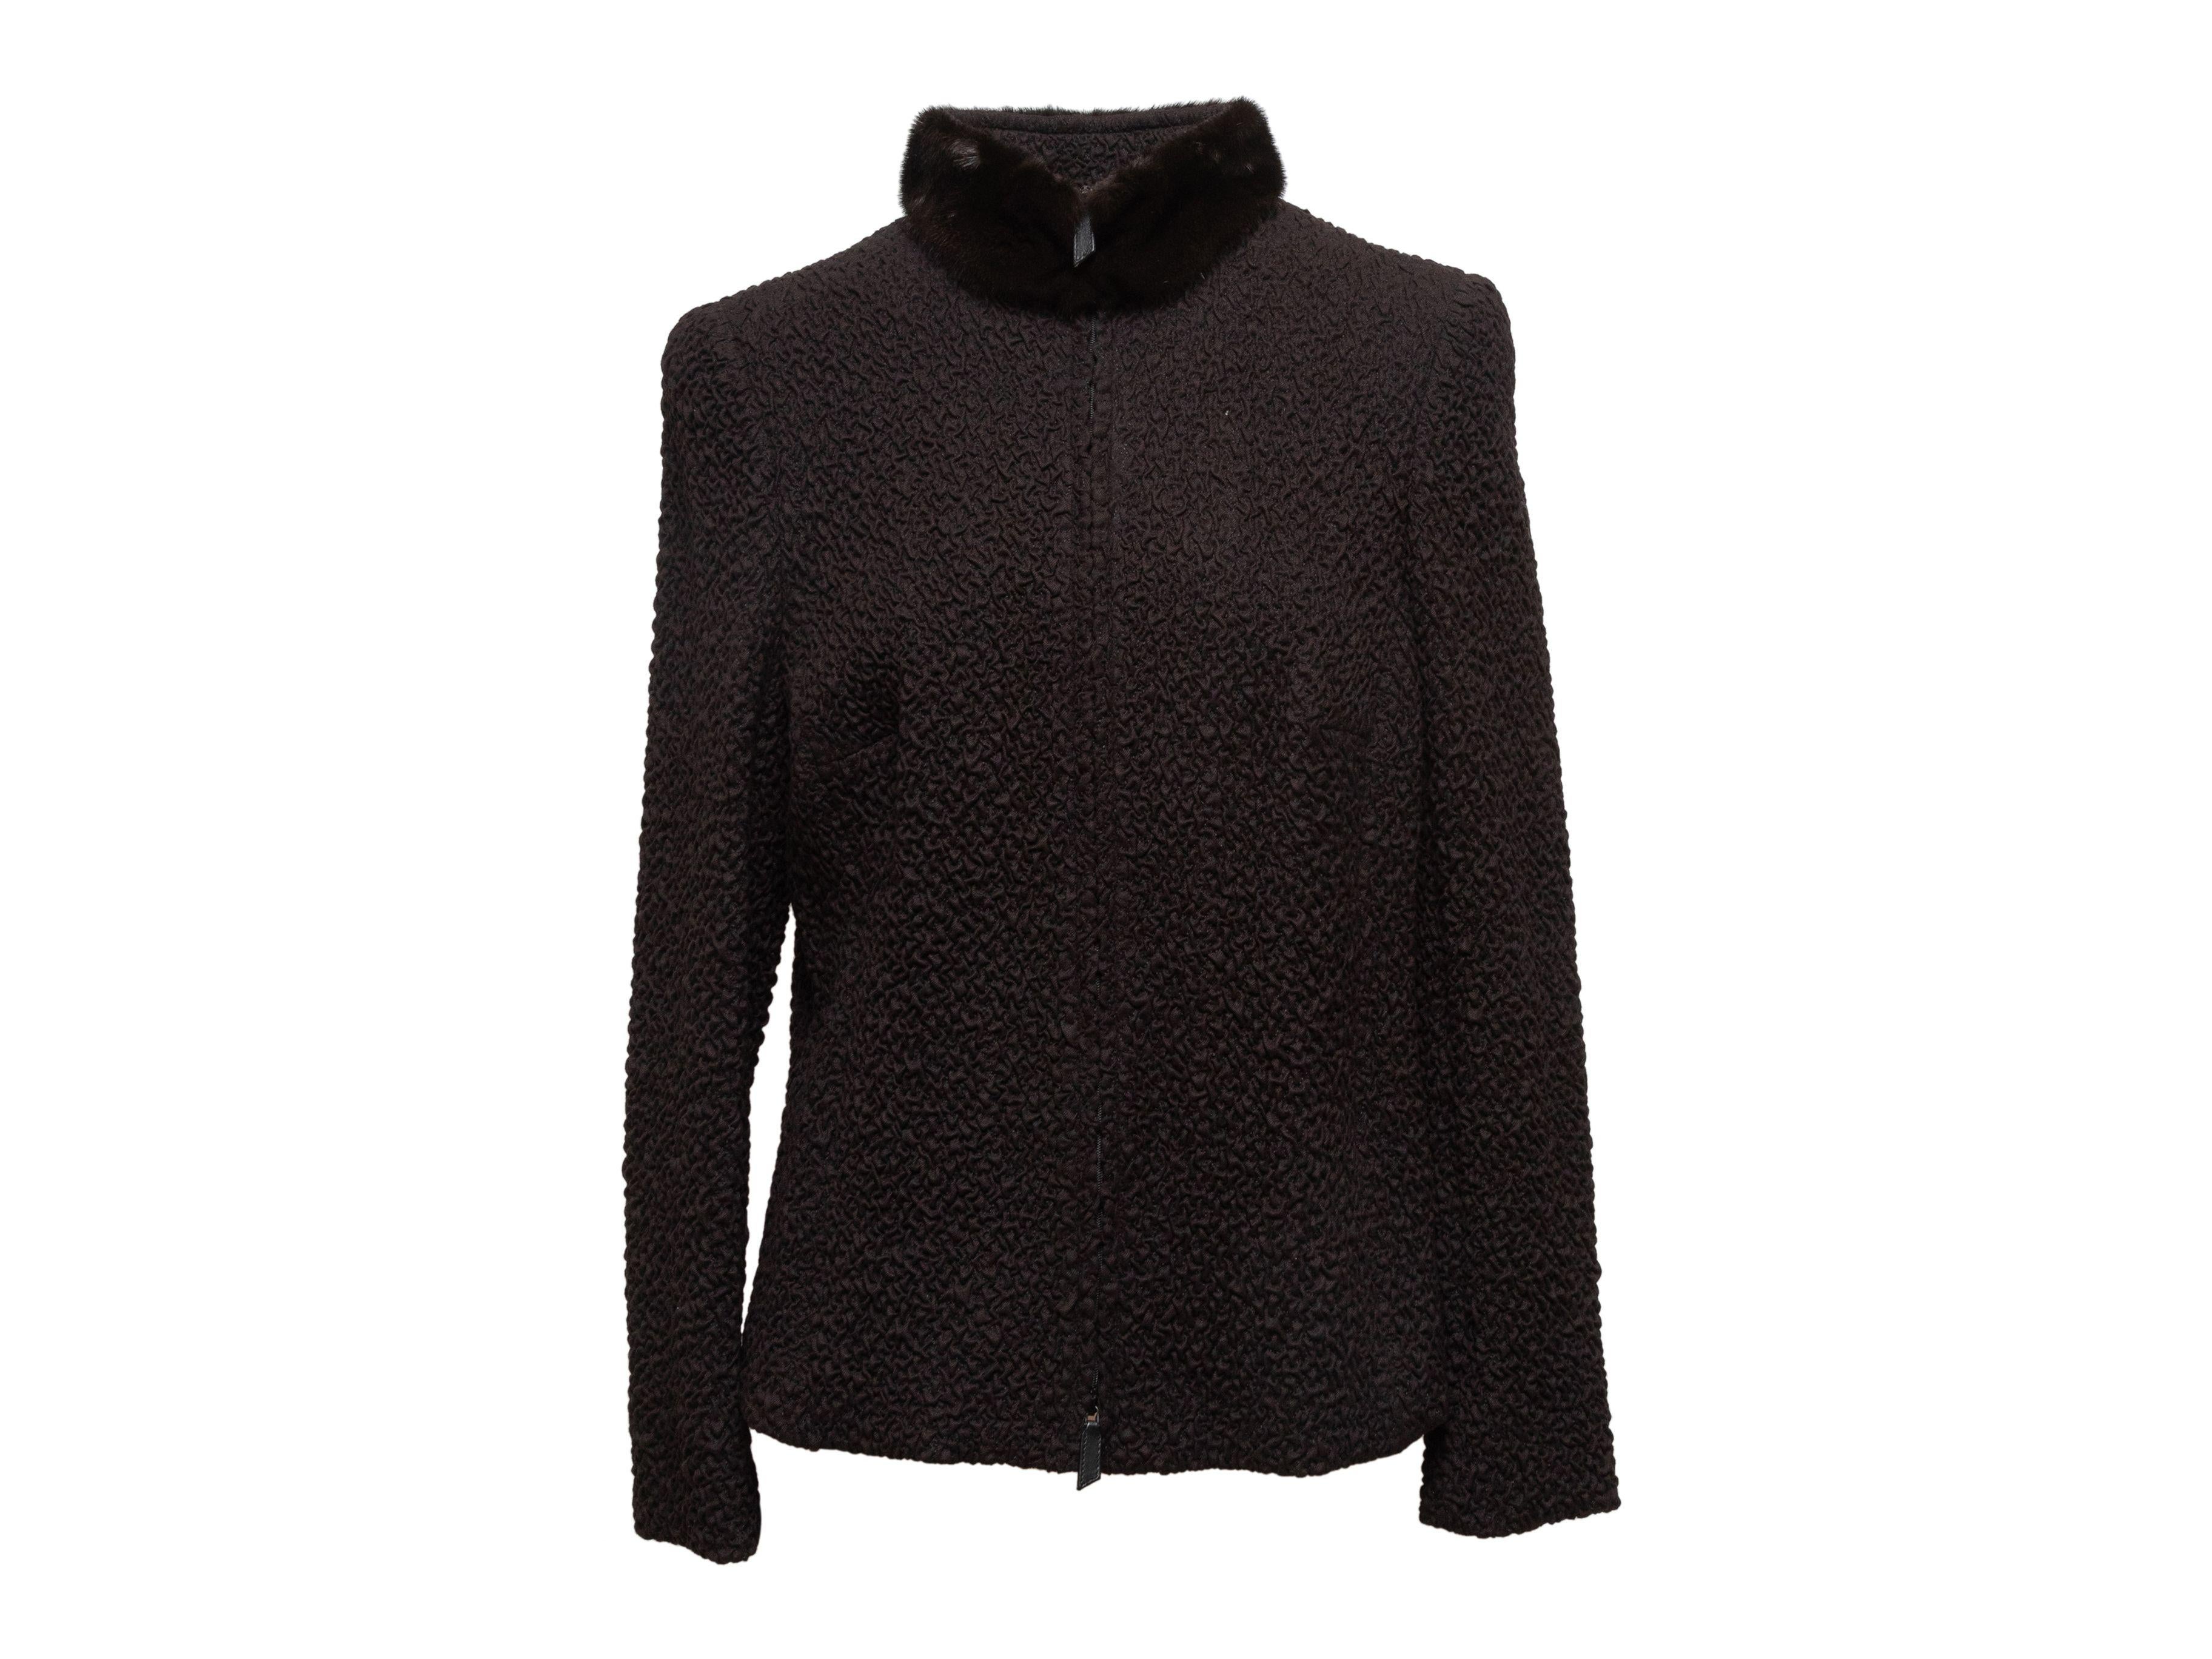 Product Details: Dark brown wool jacket by Akris. Mink fur trim at collar. Zip closure at center front. 34